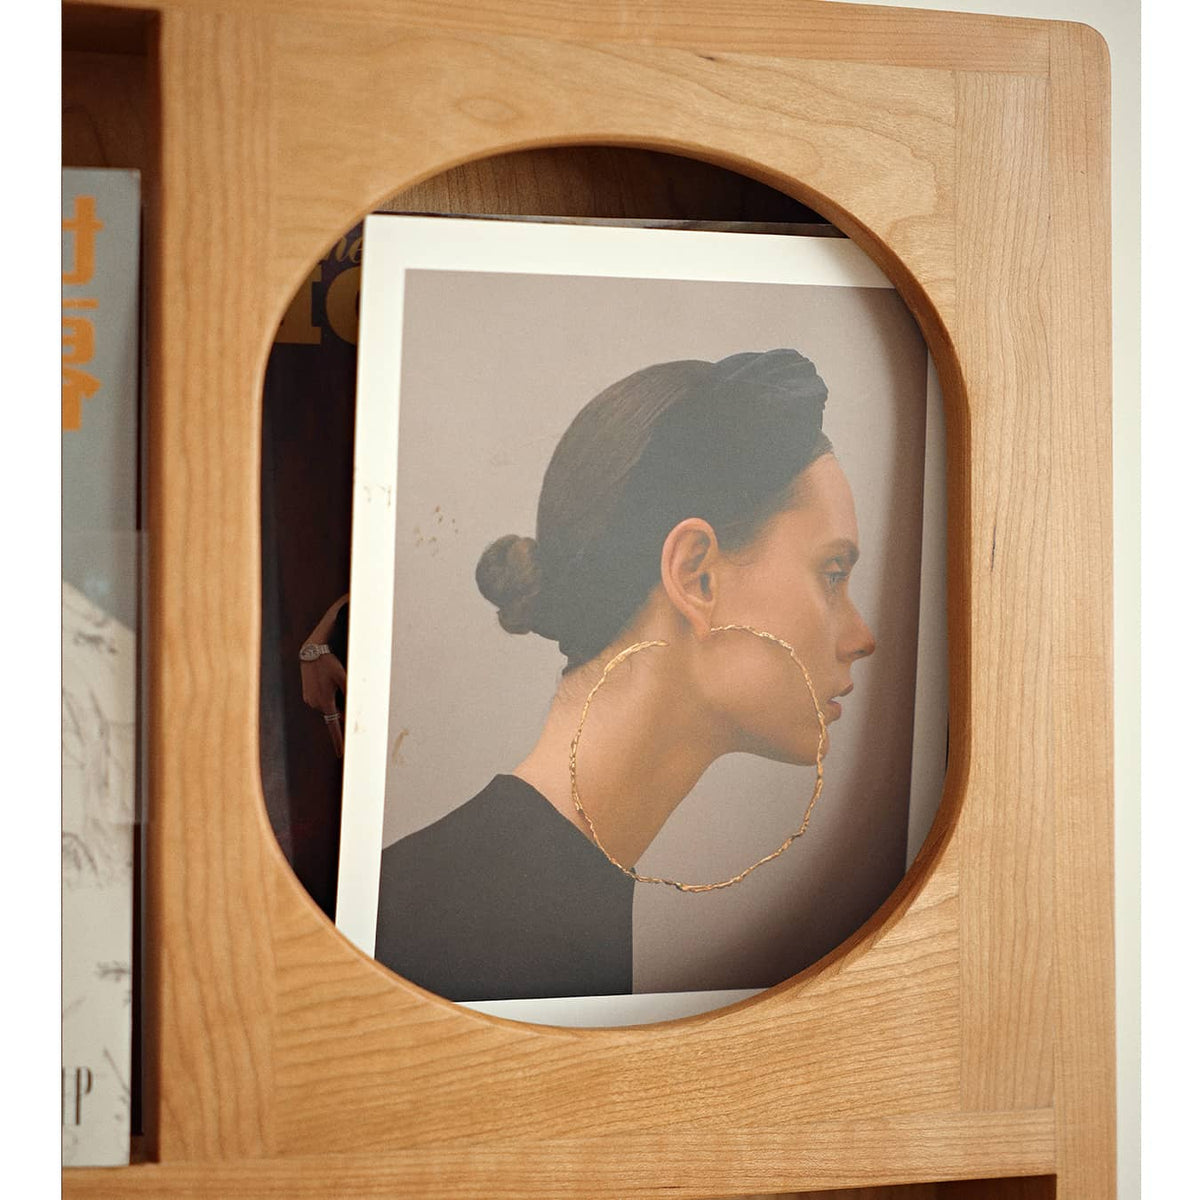 Elegant Cherry Wood Storage Rack with Glass Acrylic Accents – Durable & Stylish Organizer hldmz-738